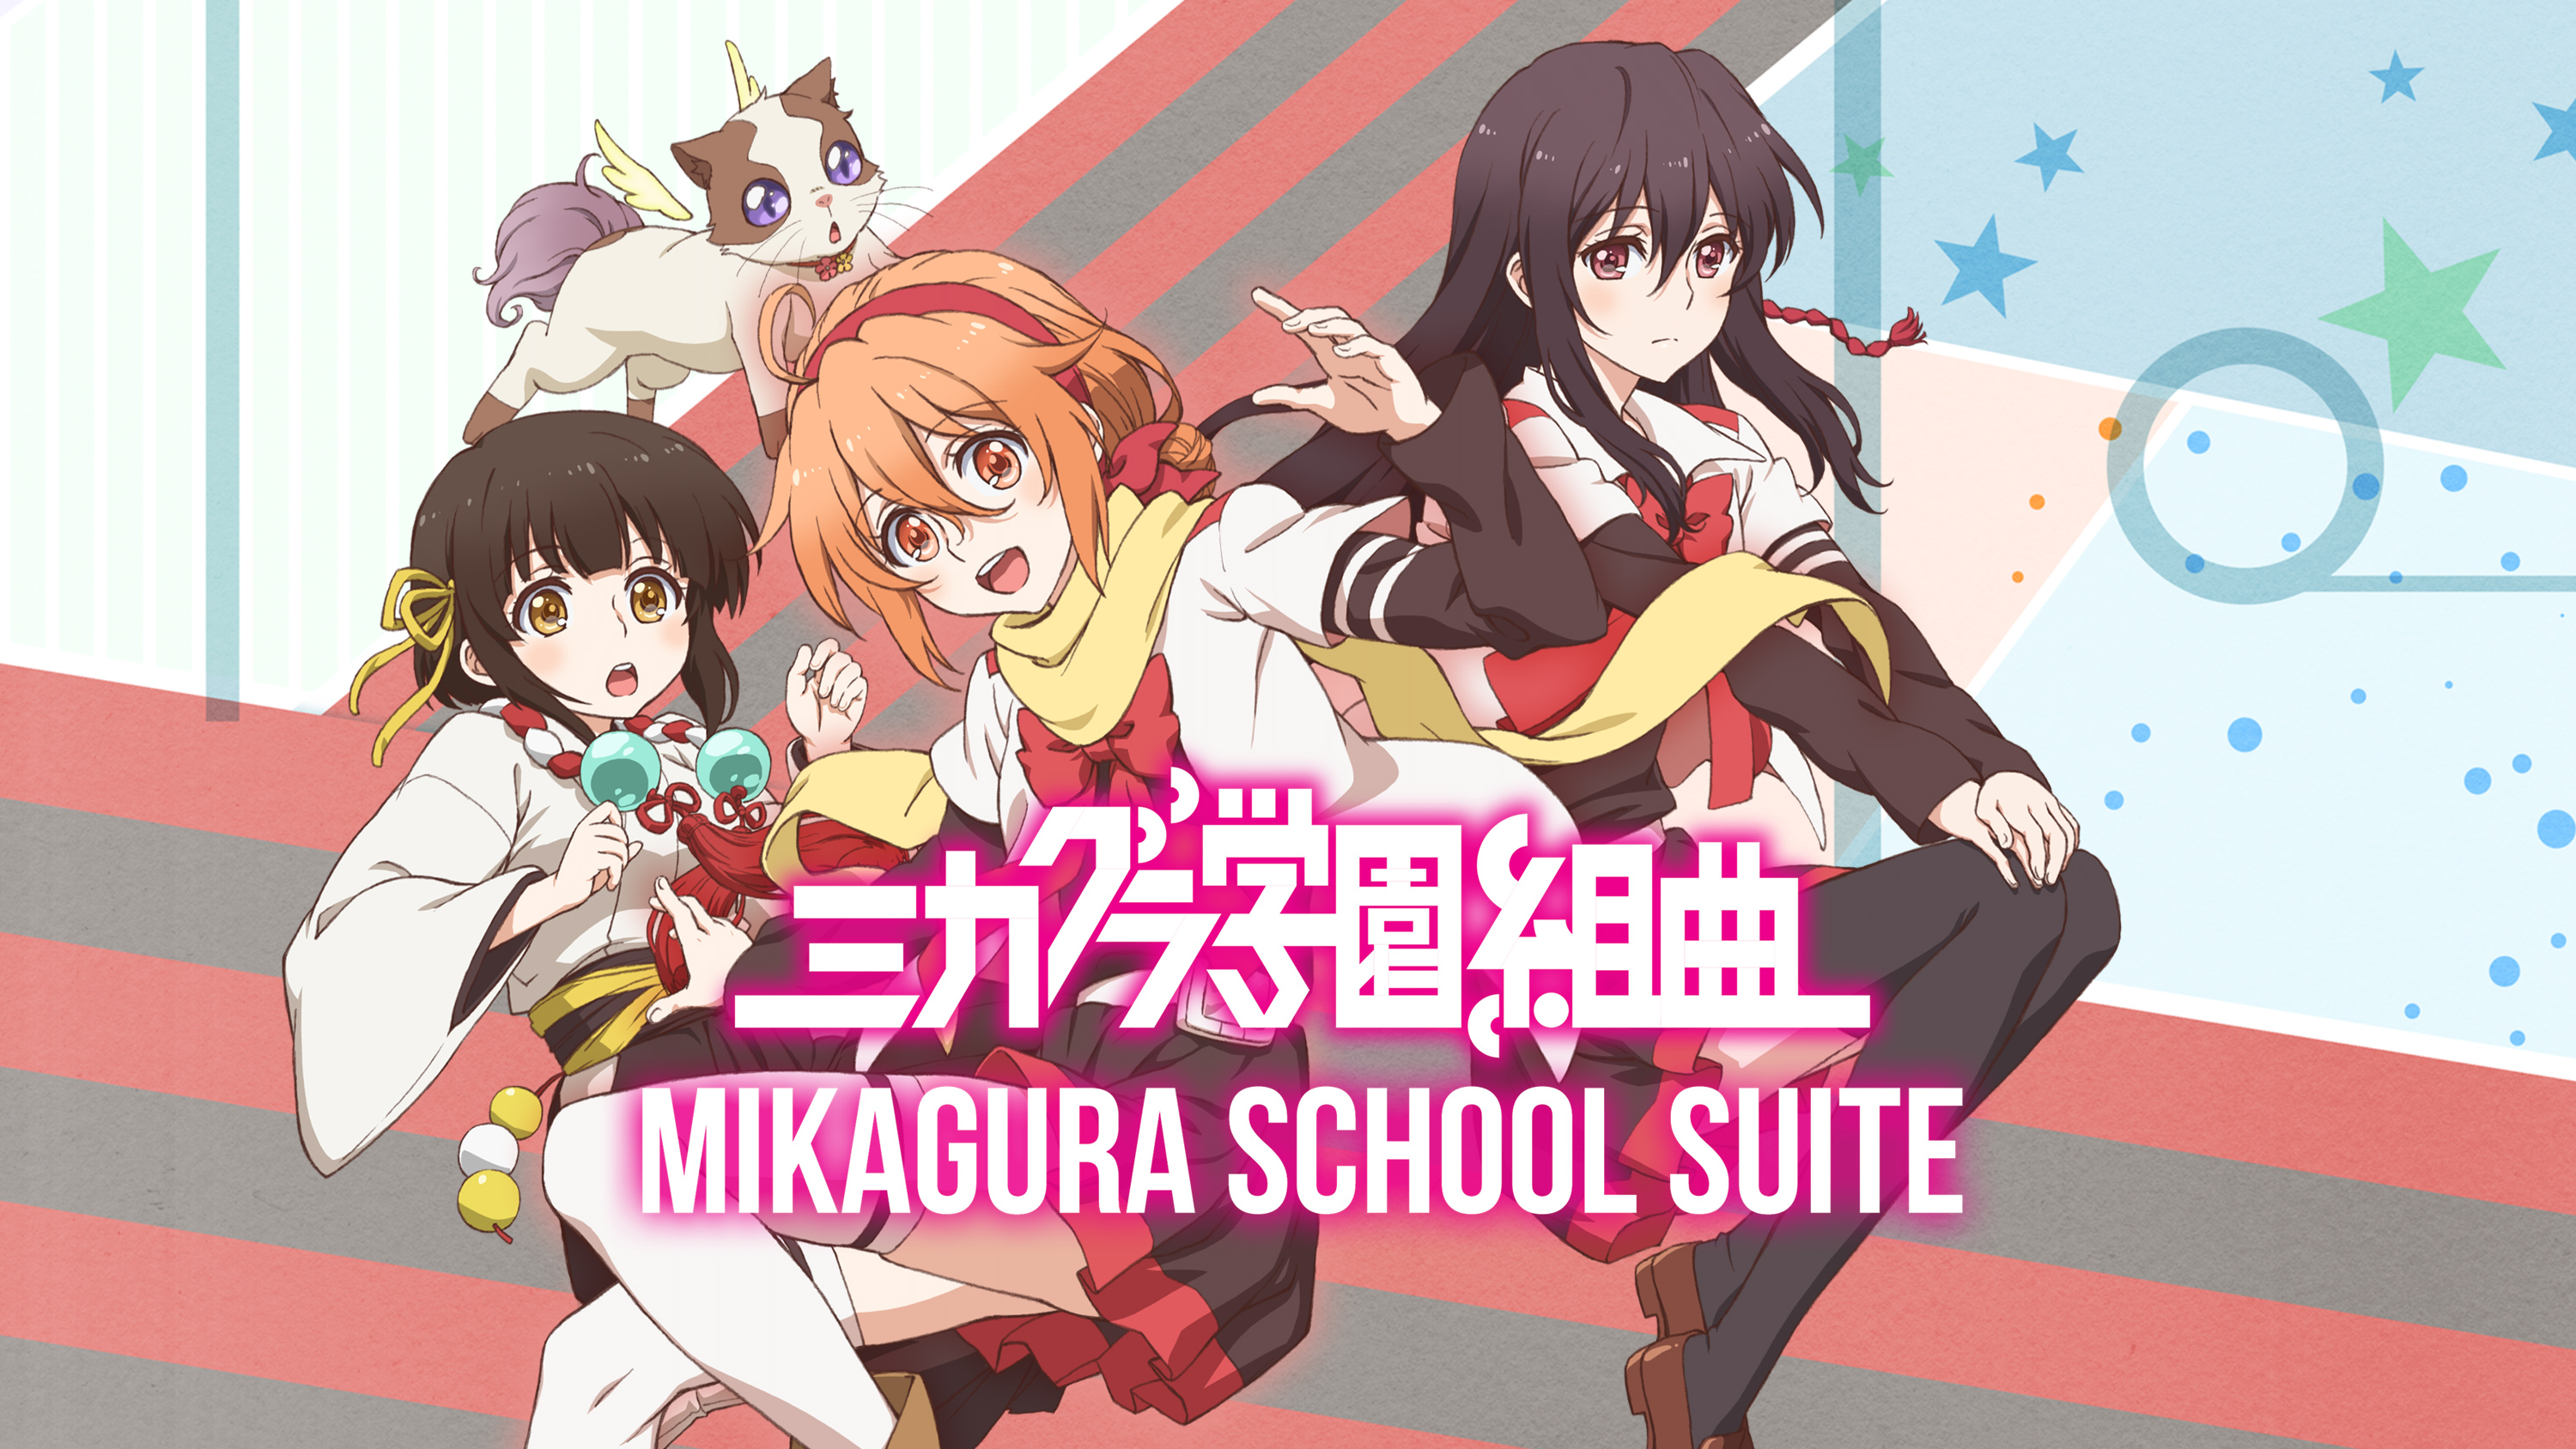 Mikagura School Suite HD Wallpaper